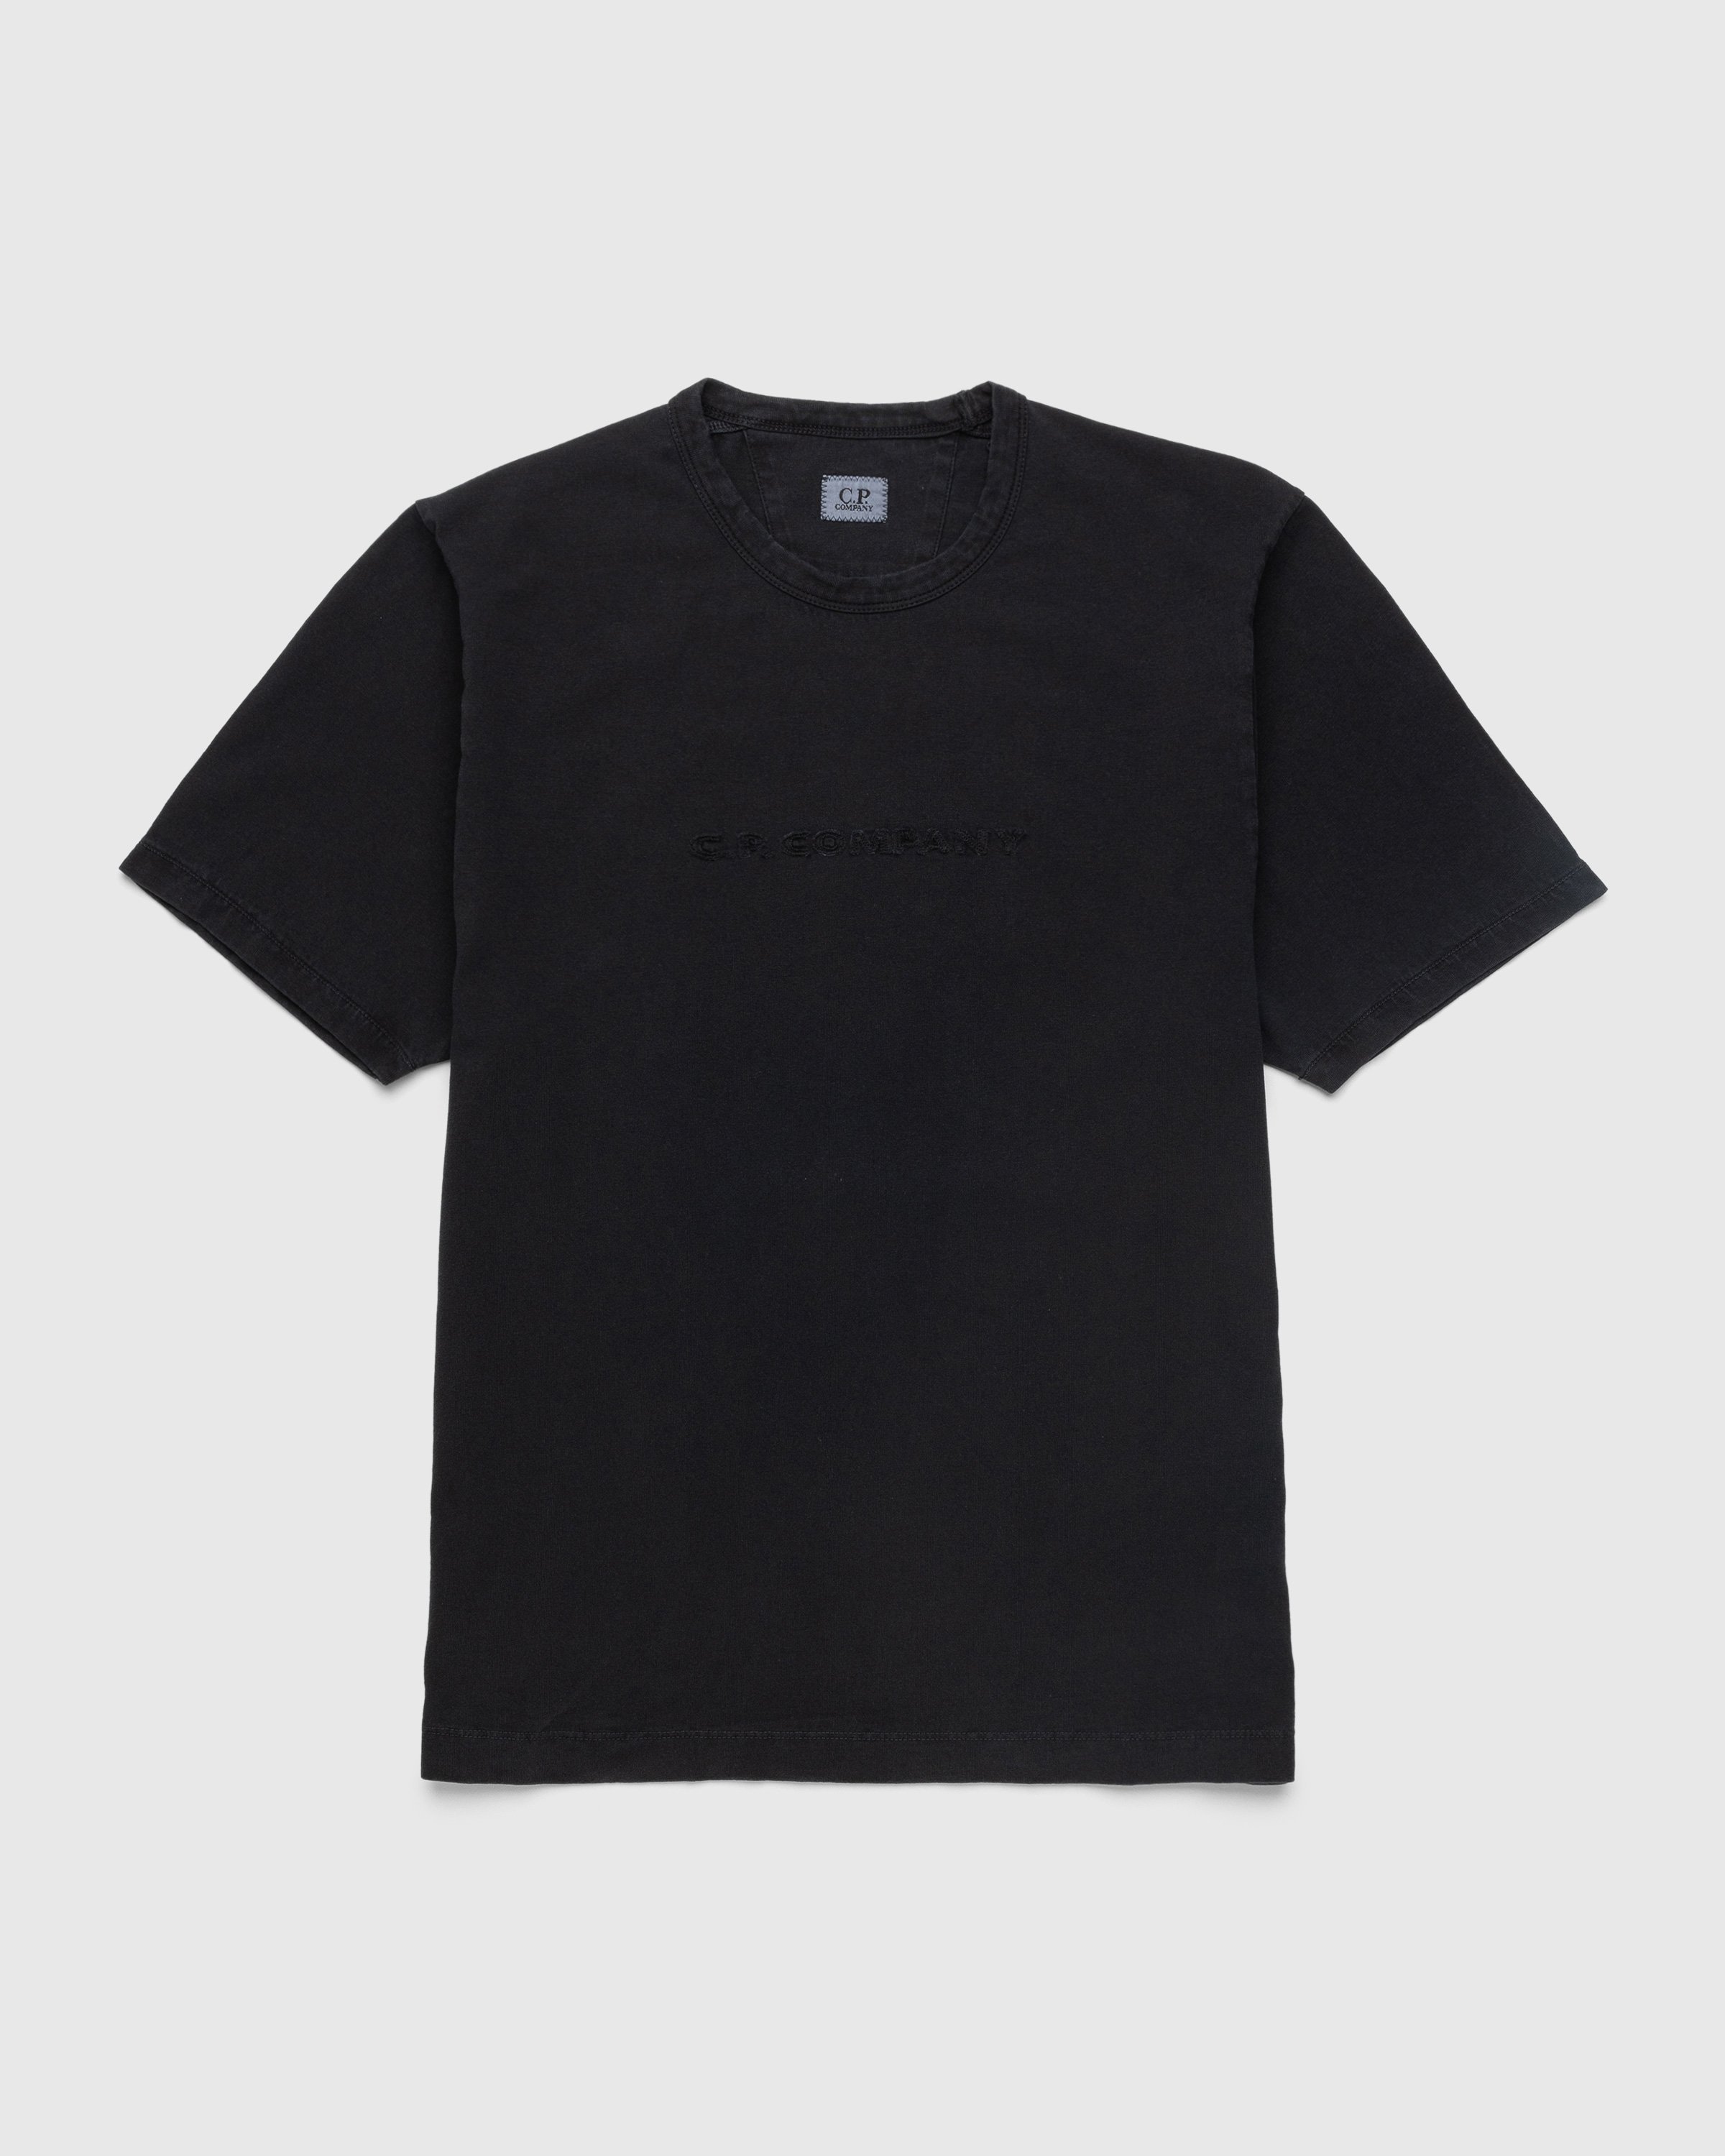 C.P. Company - 1020 Jersey Logo T-Shirt Black - Clothing - Black - Image 1